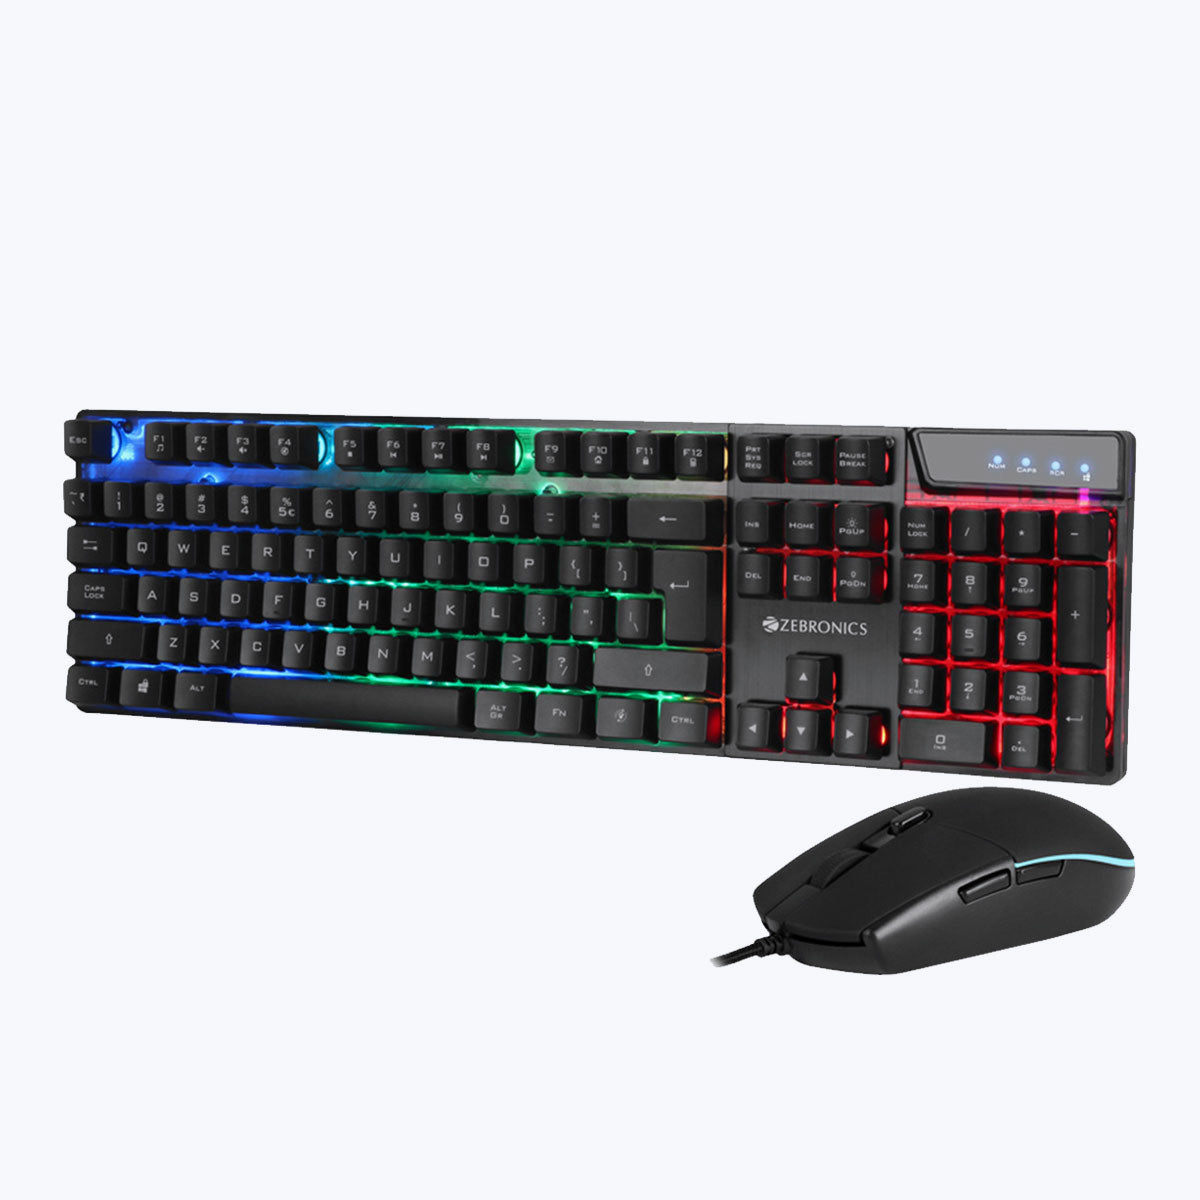 Zeb-War - Premium Gaming Keyboard and Mouse Combo - Zebronics